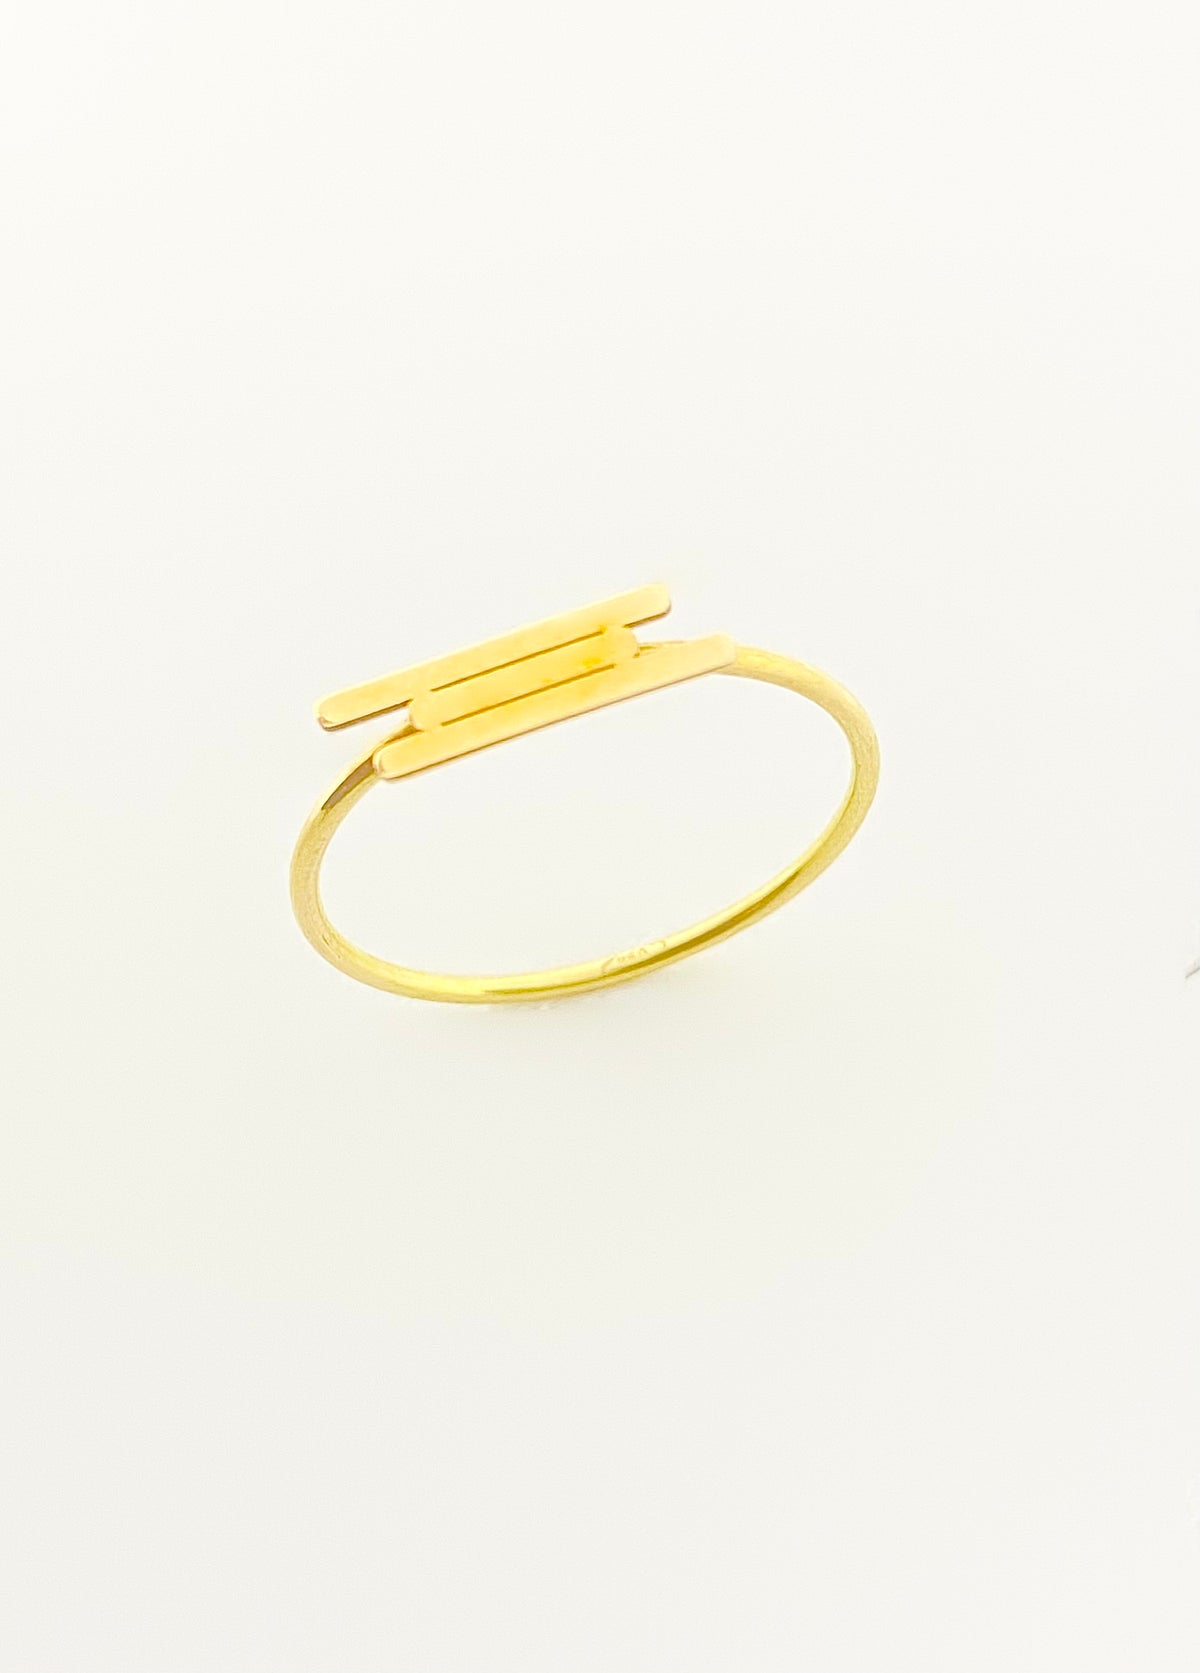 18K Real Saudi Gold Vertical Ring 139 – A Vertical Marvel in Gold Rings for Women - Embellish Gold